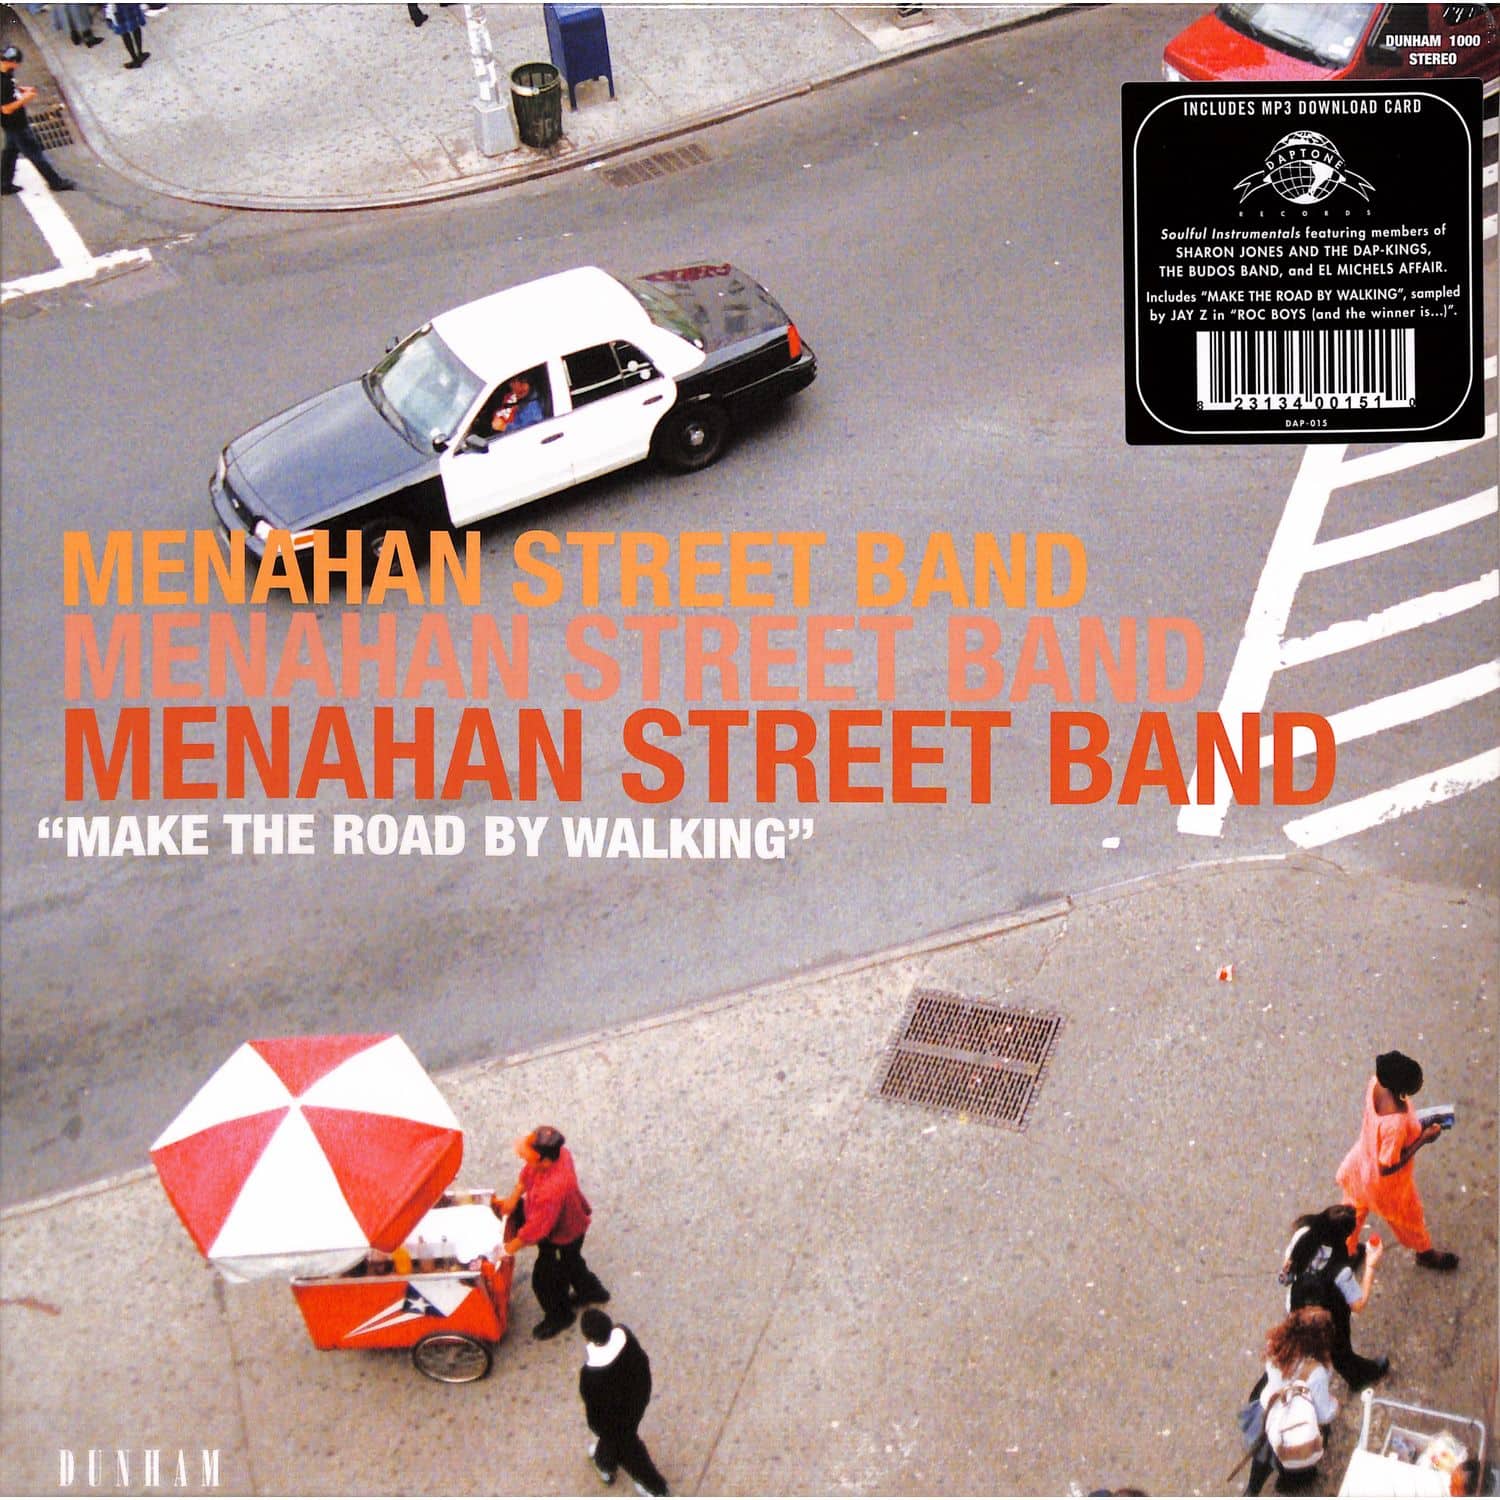 Menahan Street Band - MAKE THE ROAD BY WALKING